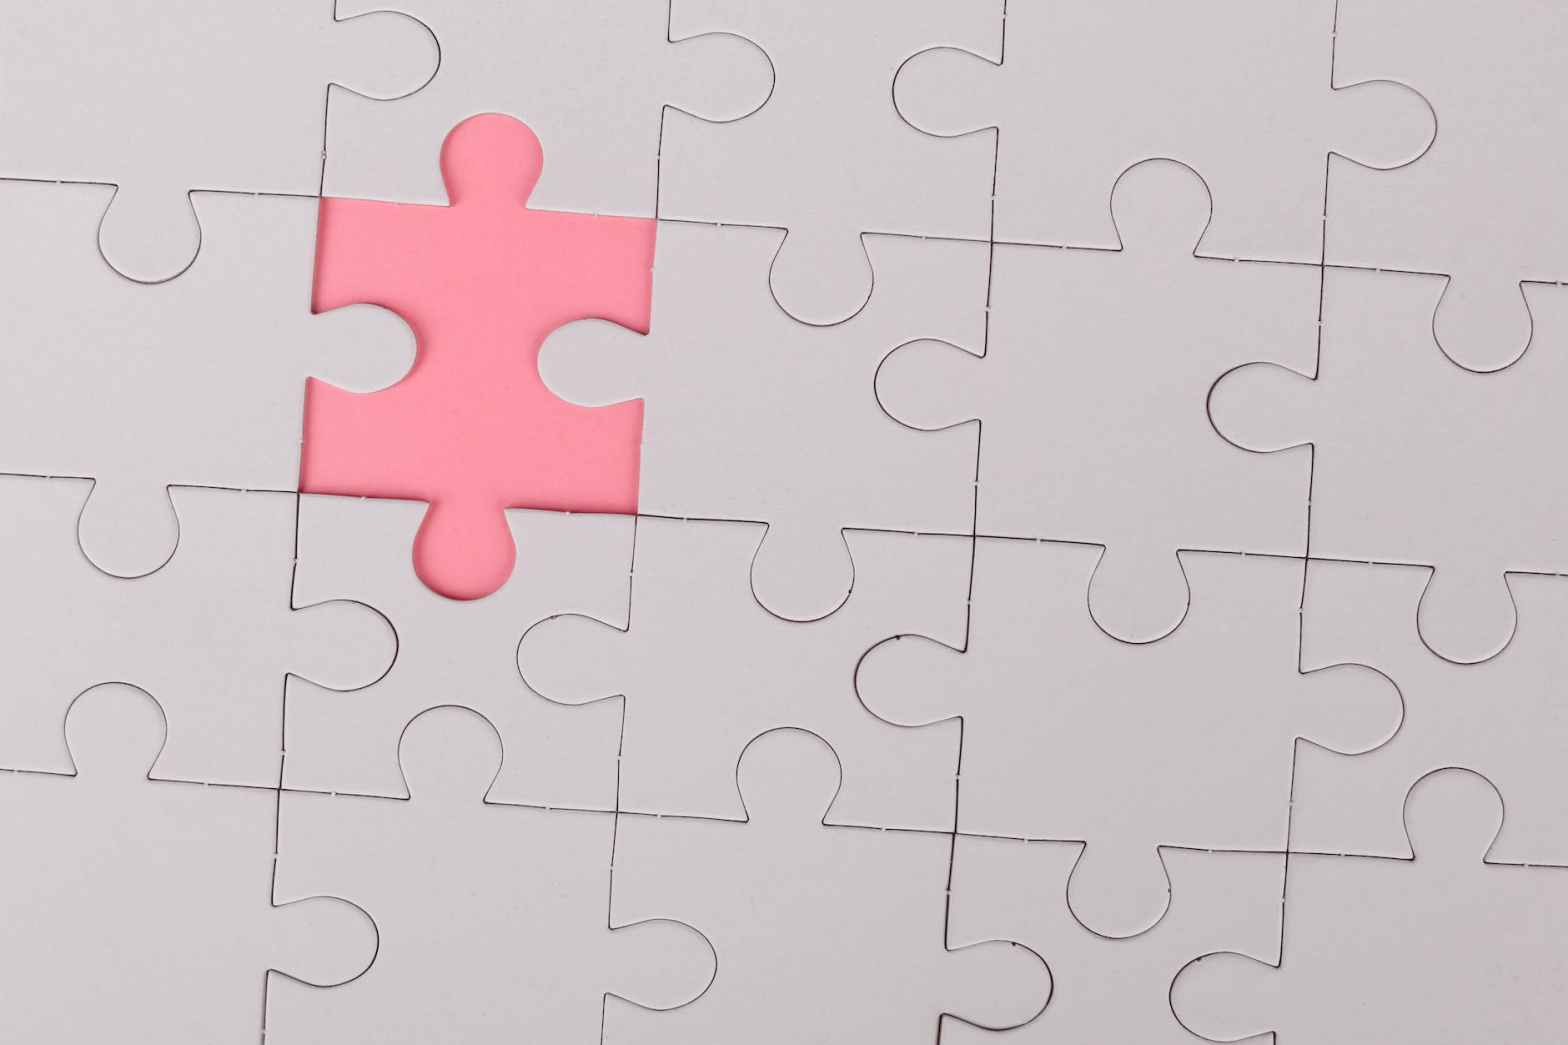 pink jigsaw puzzle piece